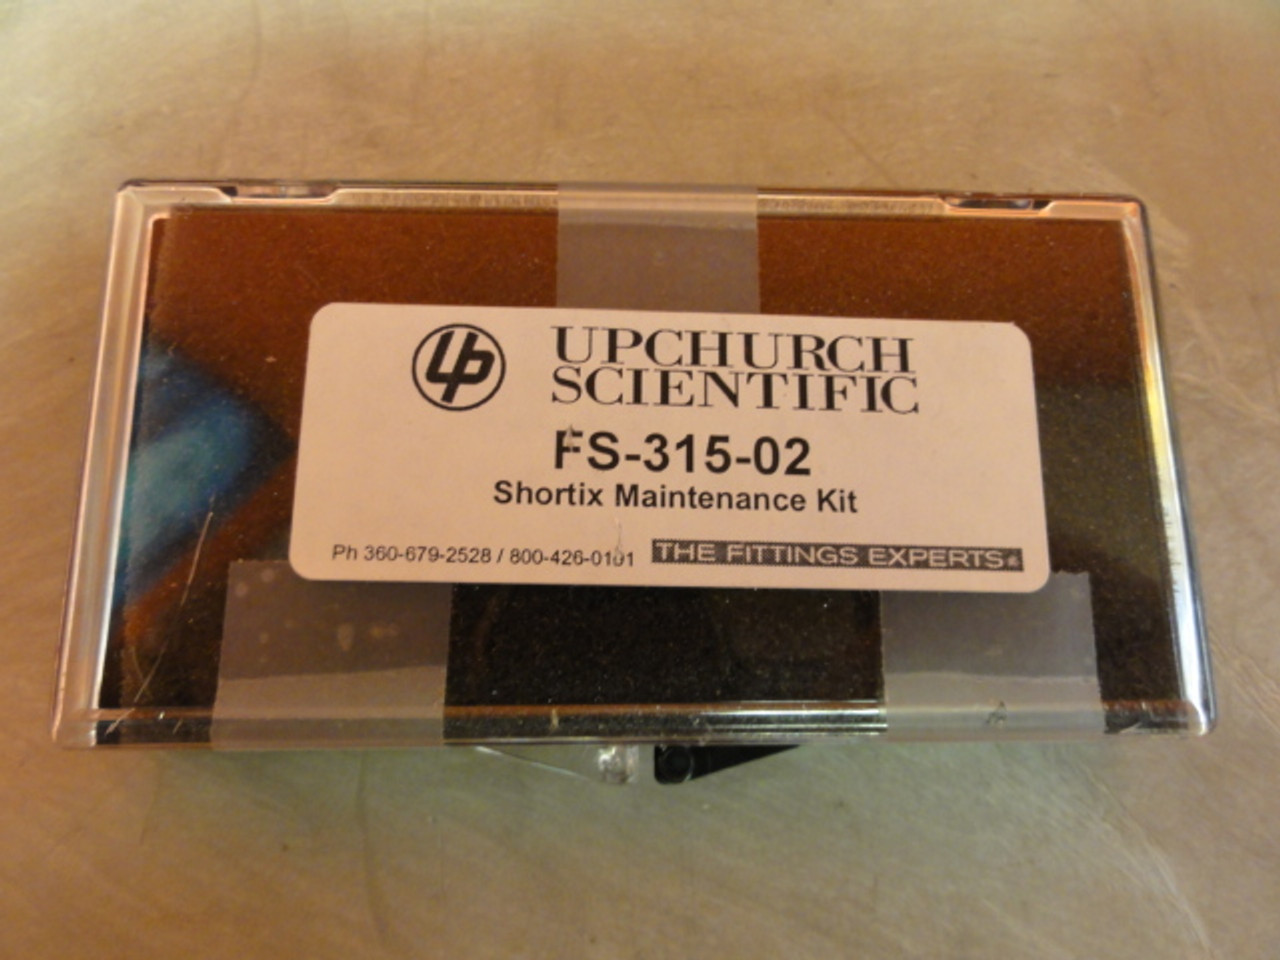 Upchurch Scientific FS-315-02 Shortix Maintenance Kit